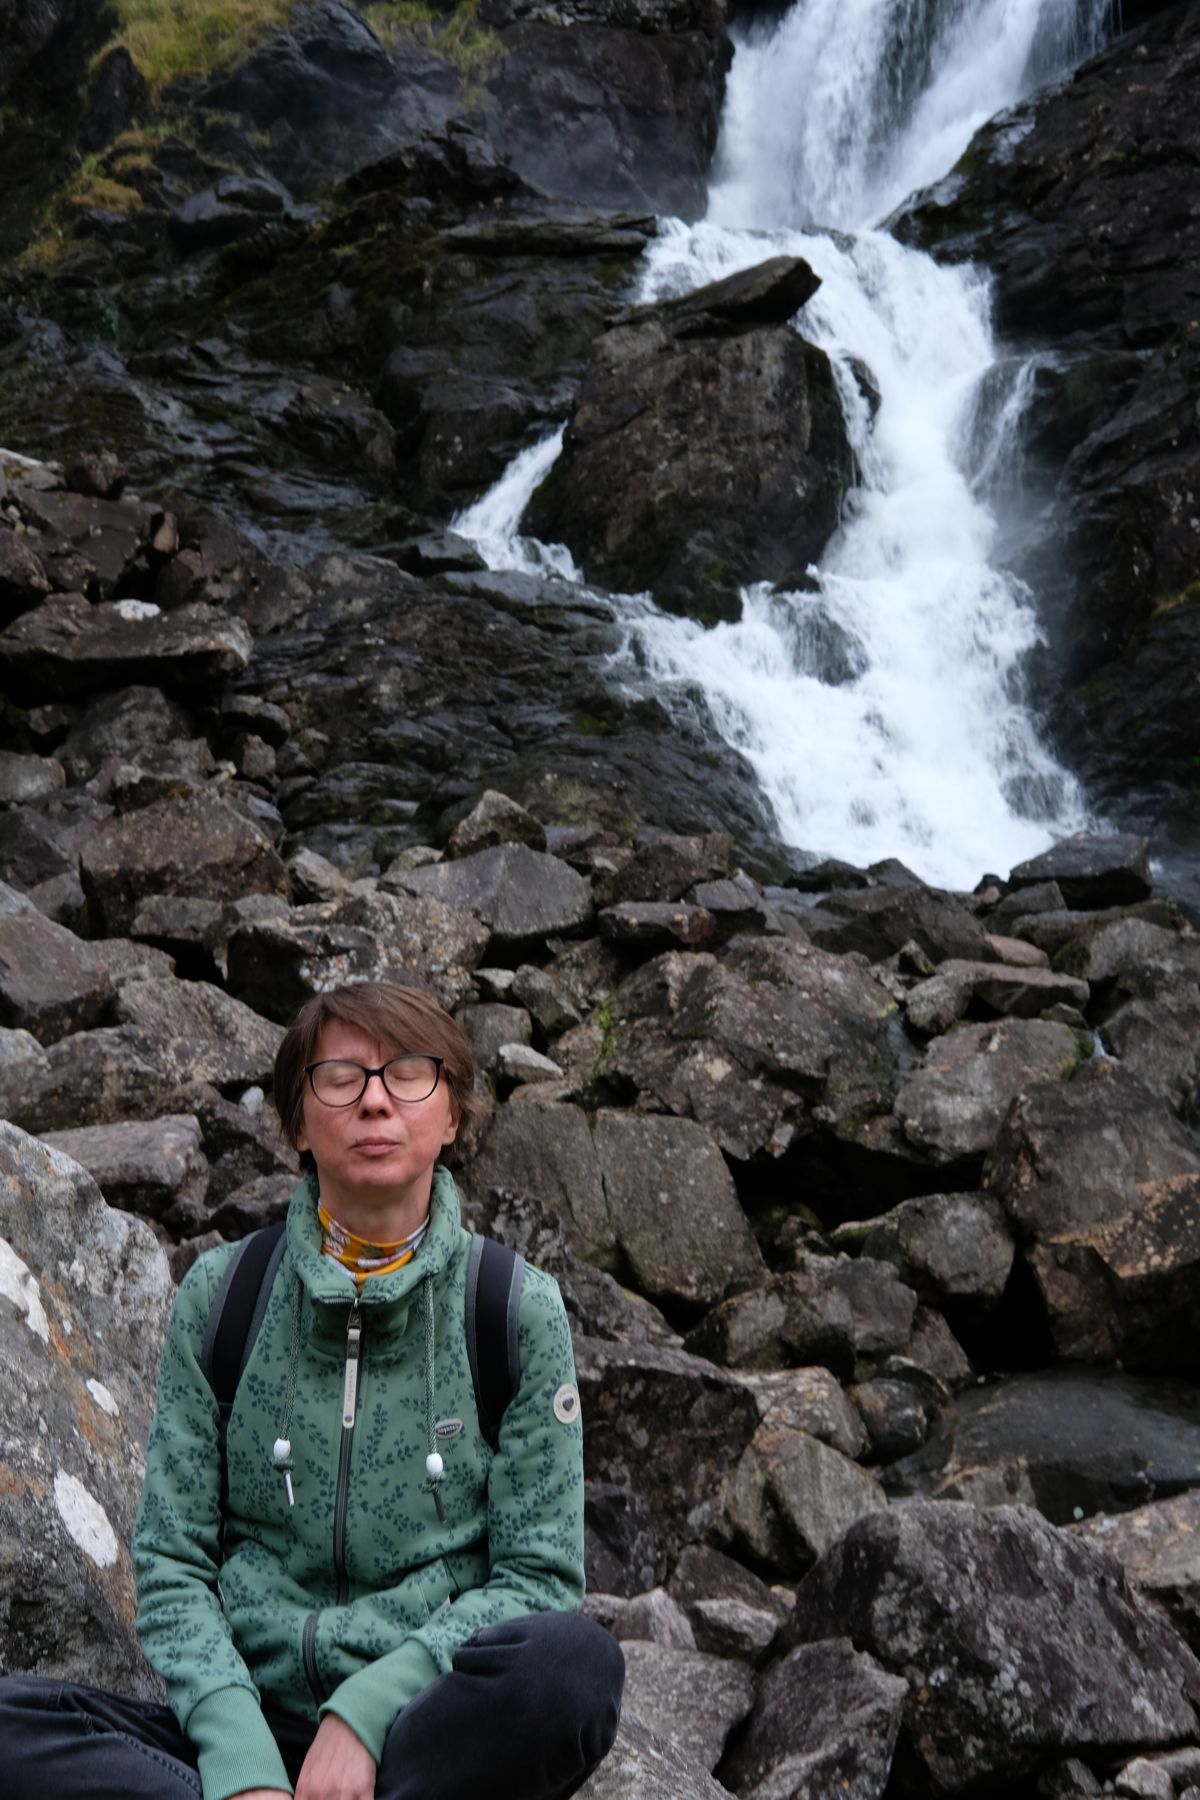 Ira meditating by the waterfall.